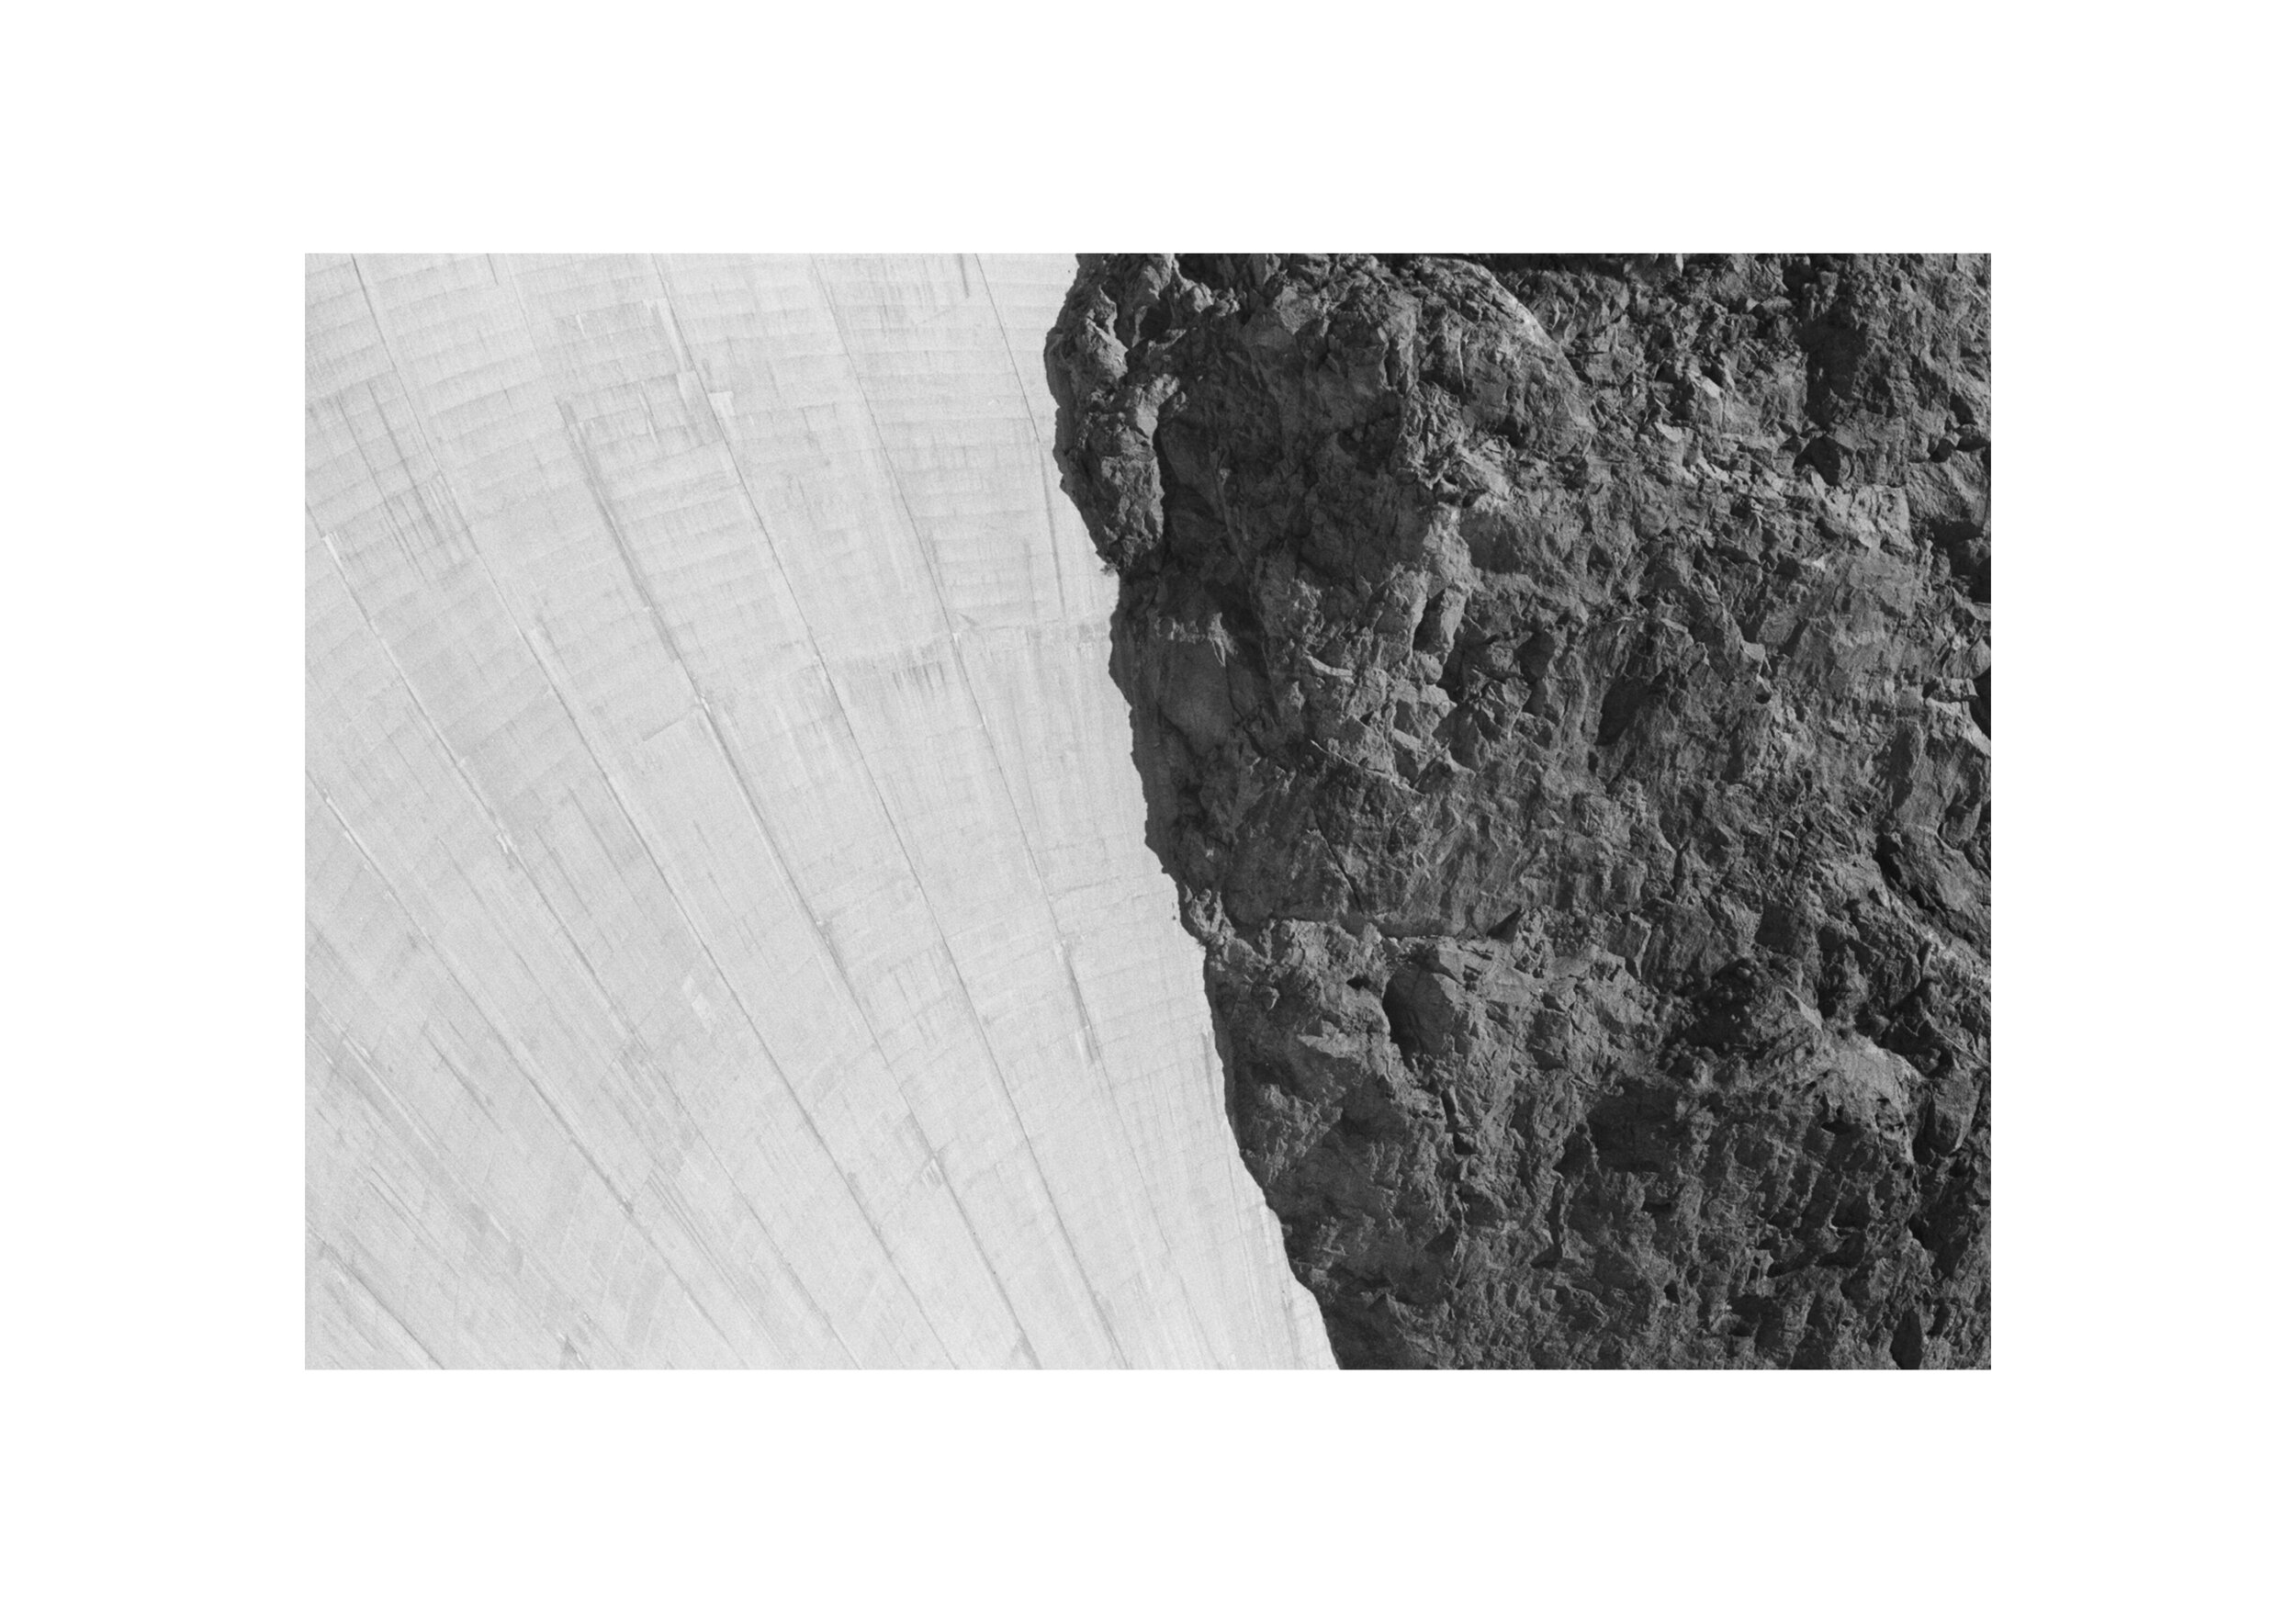 Hoover Dam Essay_UPDATE30.jpg